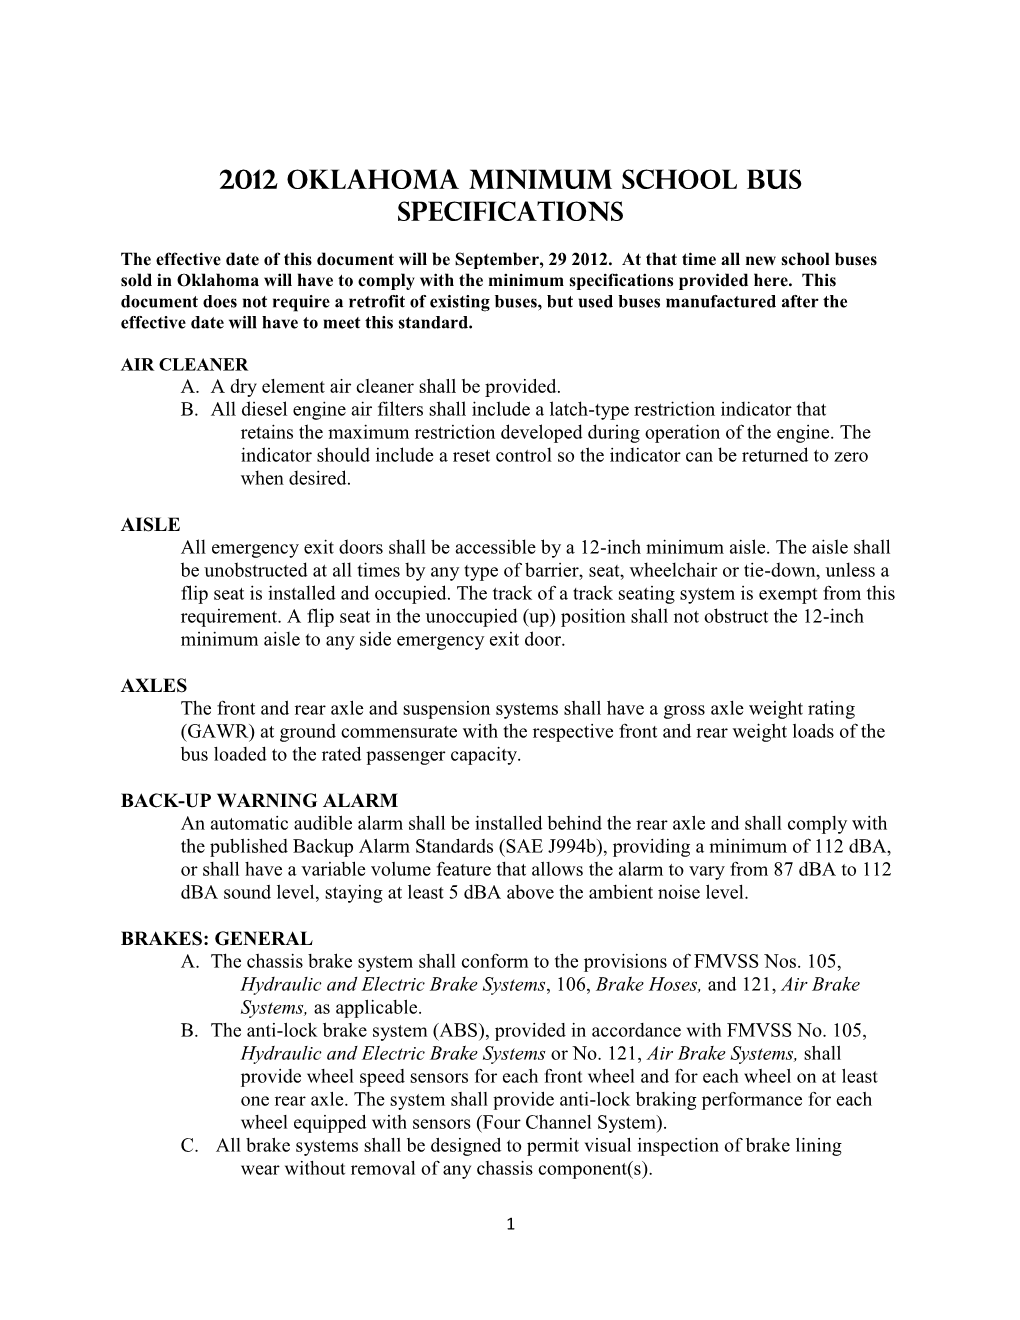 2012 Oklahoma Minimum School Bus Specifications